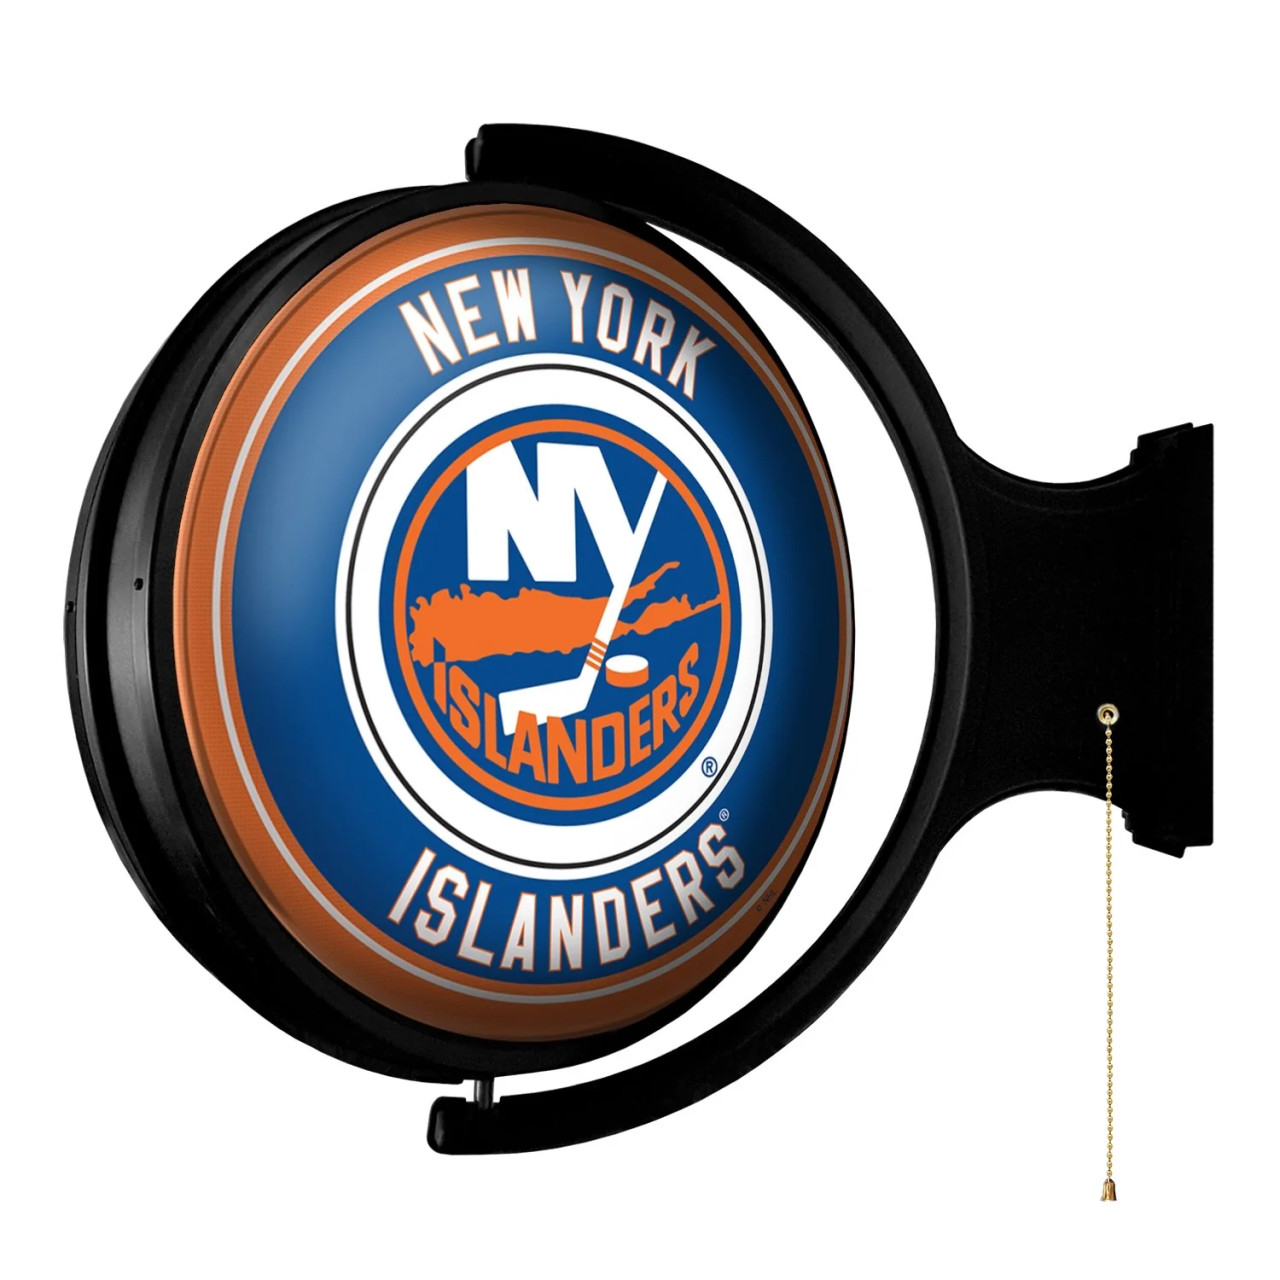 NHNYIS-115-01, NY, New York, Islanders, Original, Round, Rotating, Lighted, Wall, Sign, NHNYIS-115-01, NHL, The Fan-Brand, 686082114783